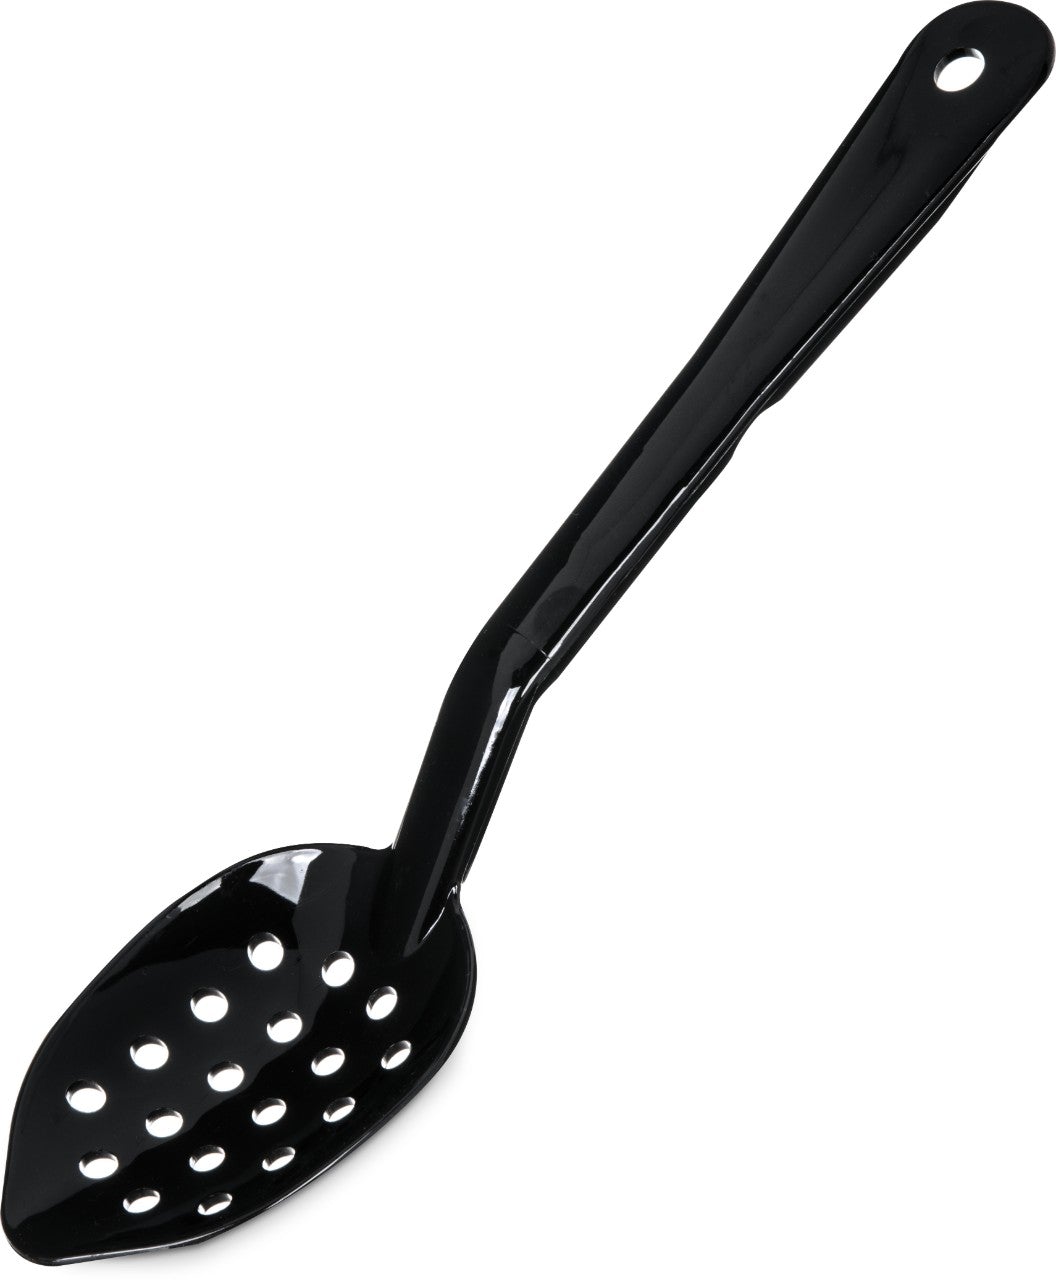 Carlisle 4411-03 11" Black Perforated Spoon